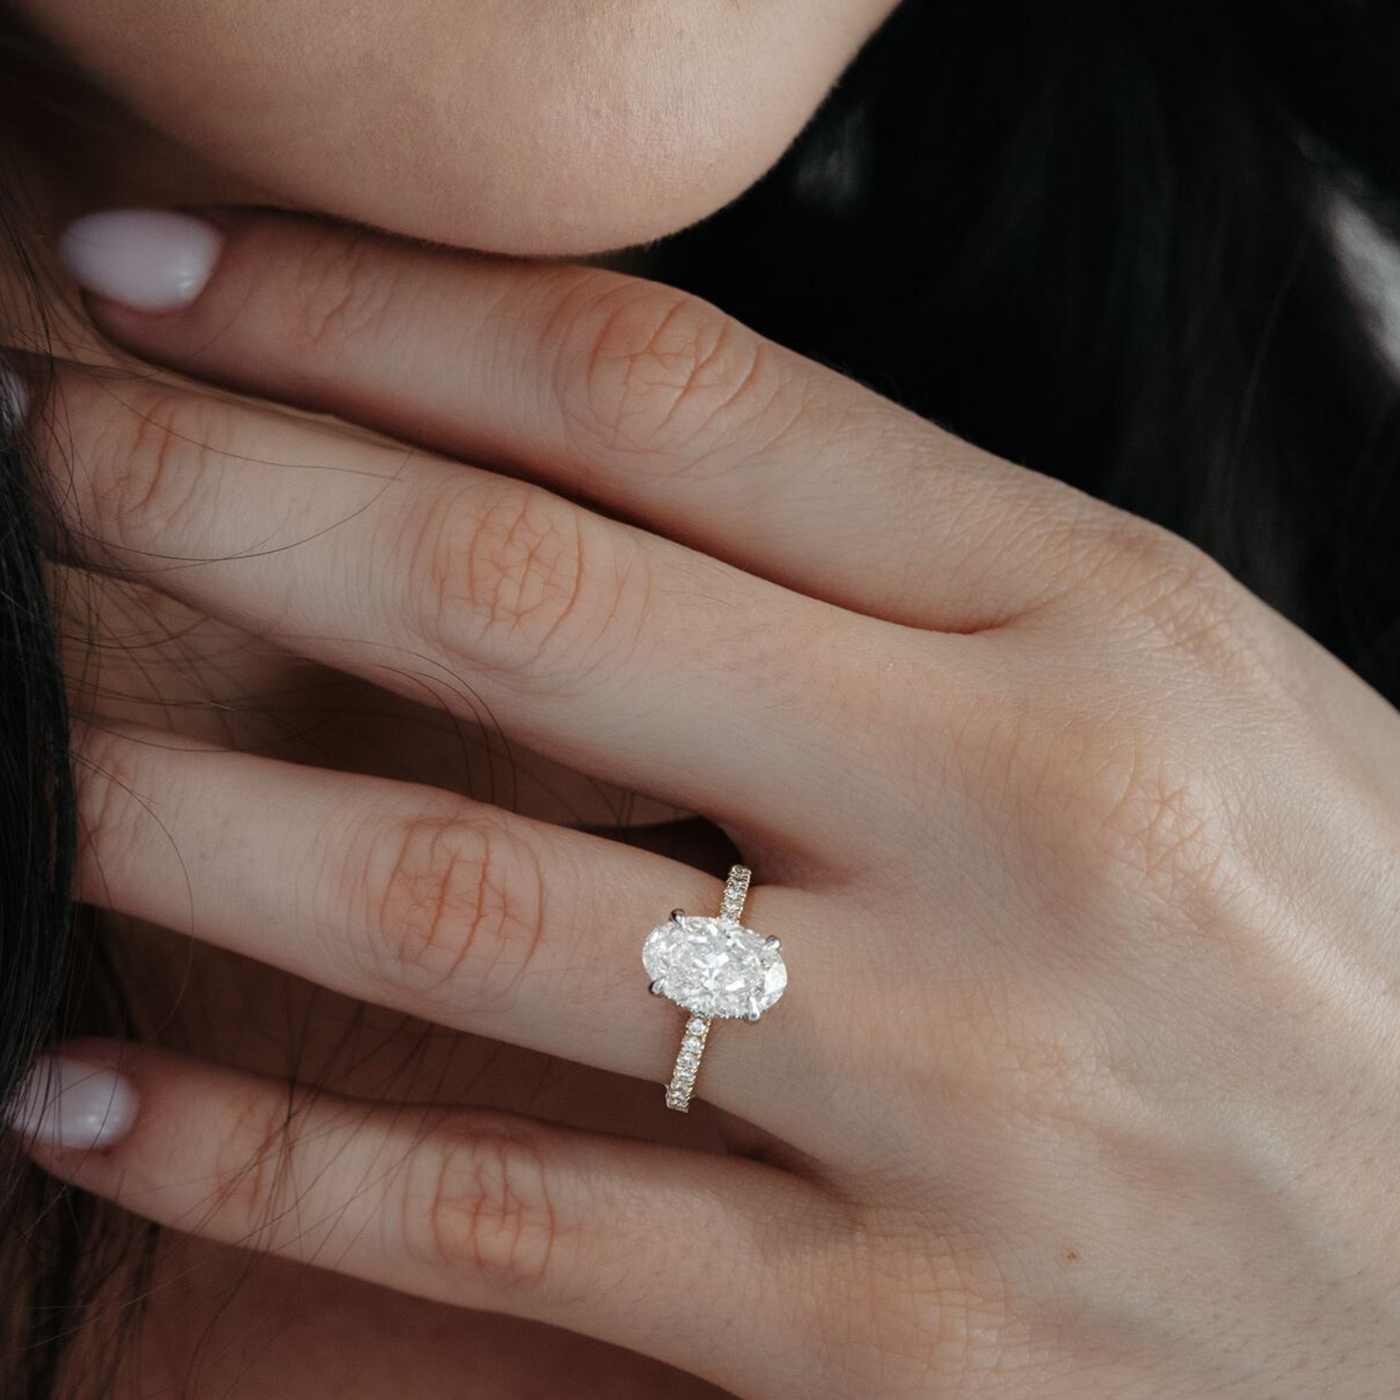 2.5 carat oval cut diamond engagement ring